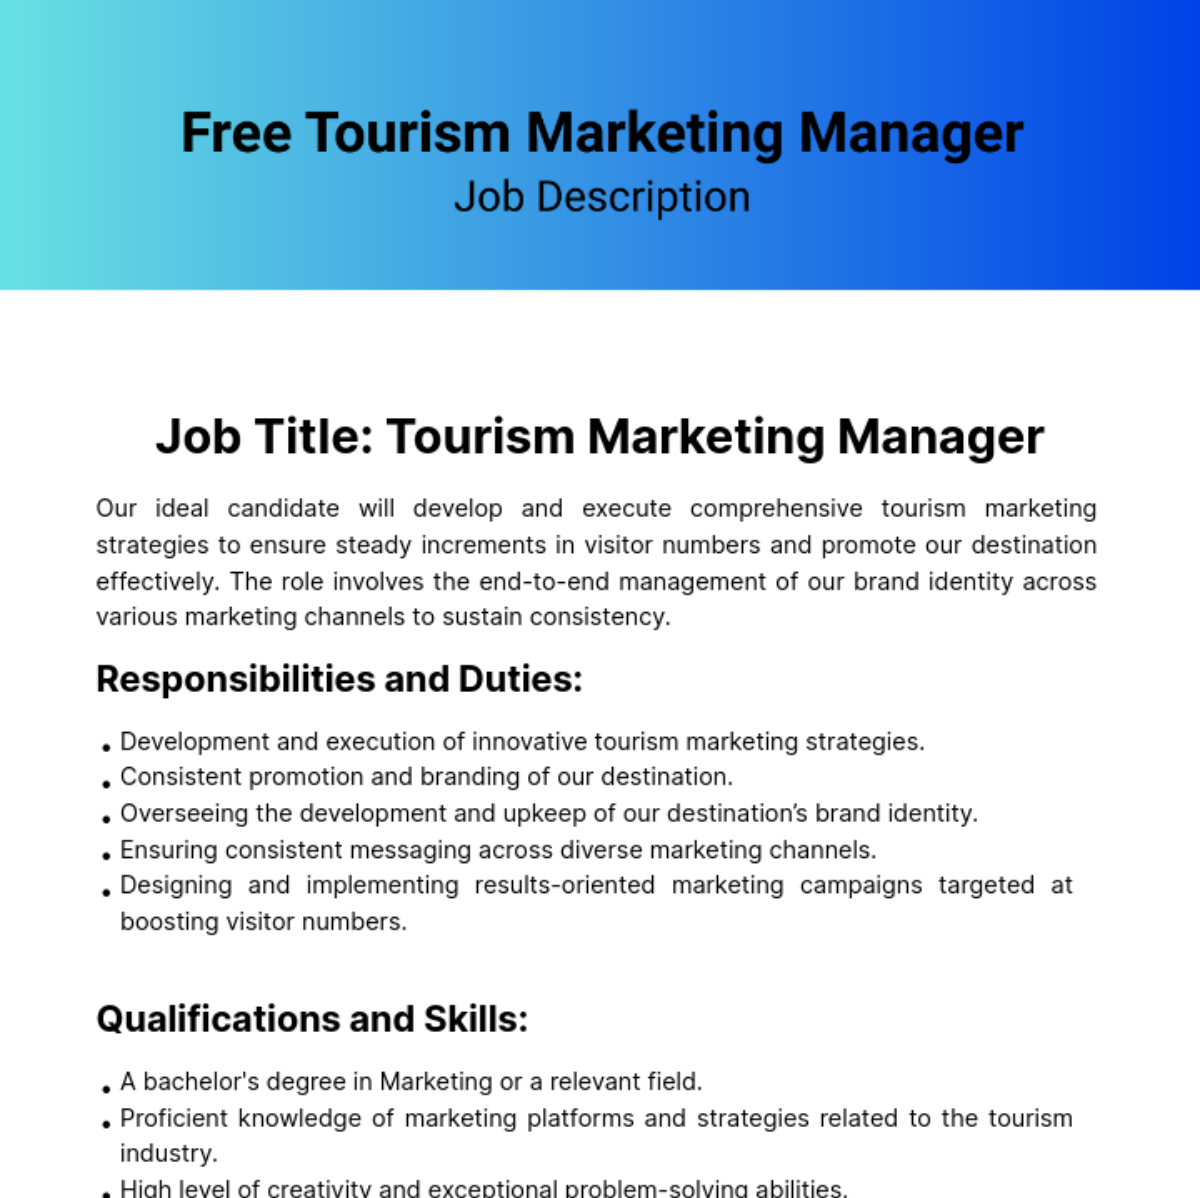 Tourism Marketing Manager Job Description Template